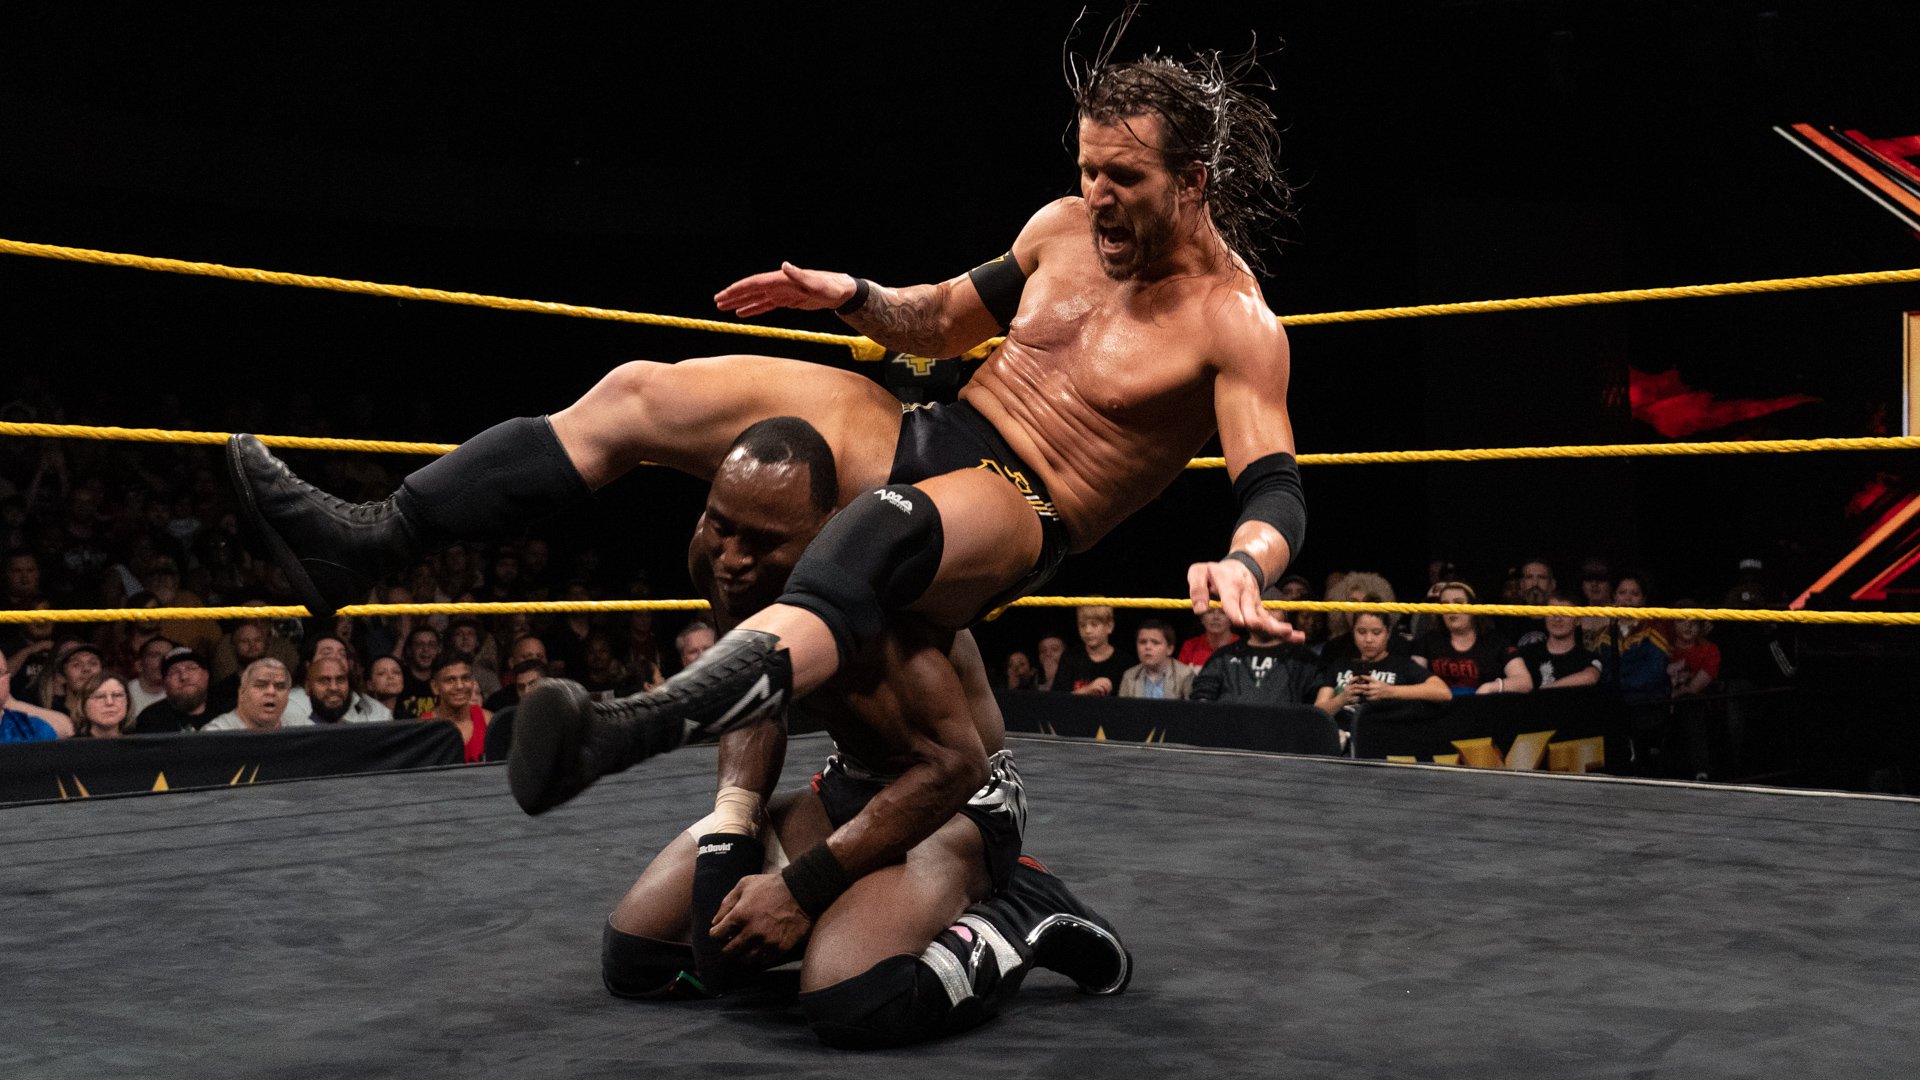 WWE WRESTLING NEWS UPDATES 2019: NXT Champion Adam Cole def. Jordan Myles